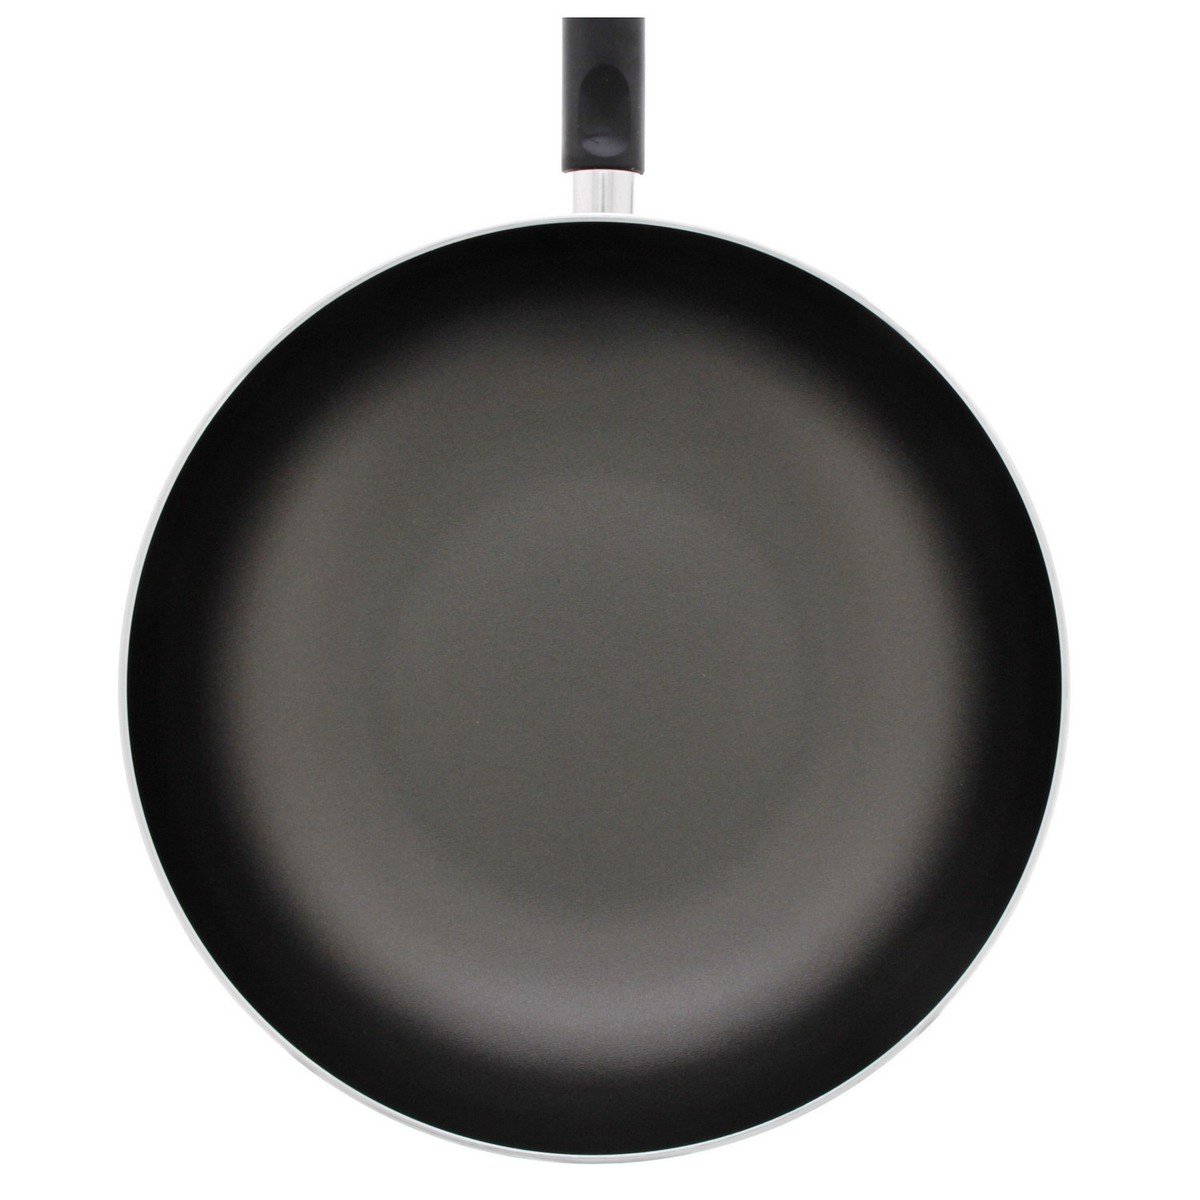 Prestige Non-Stick Wok Pan with Lid, 26 cm